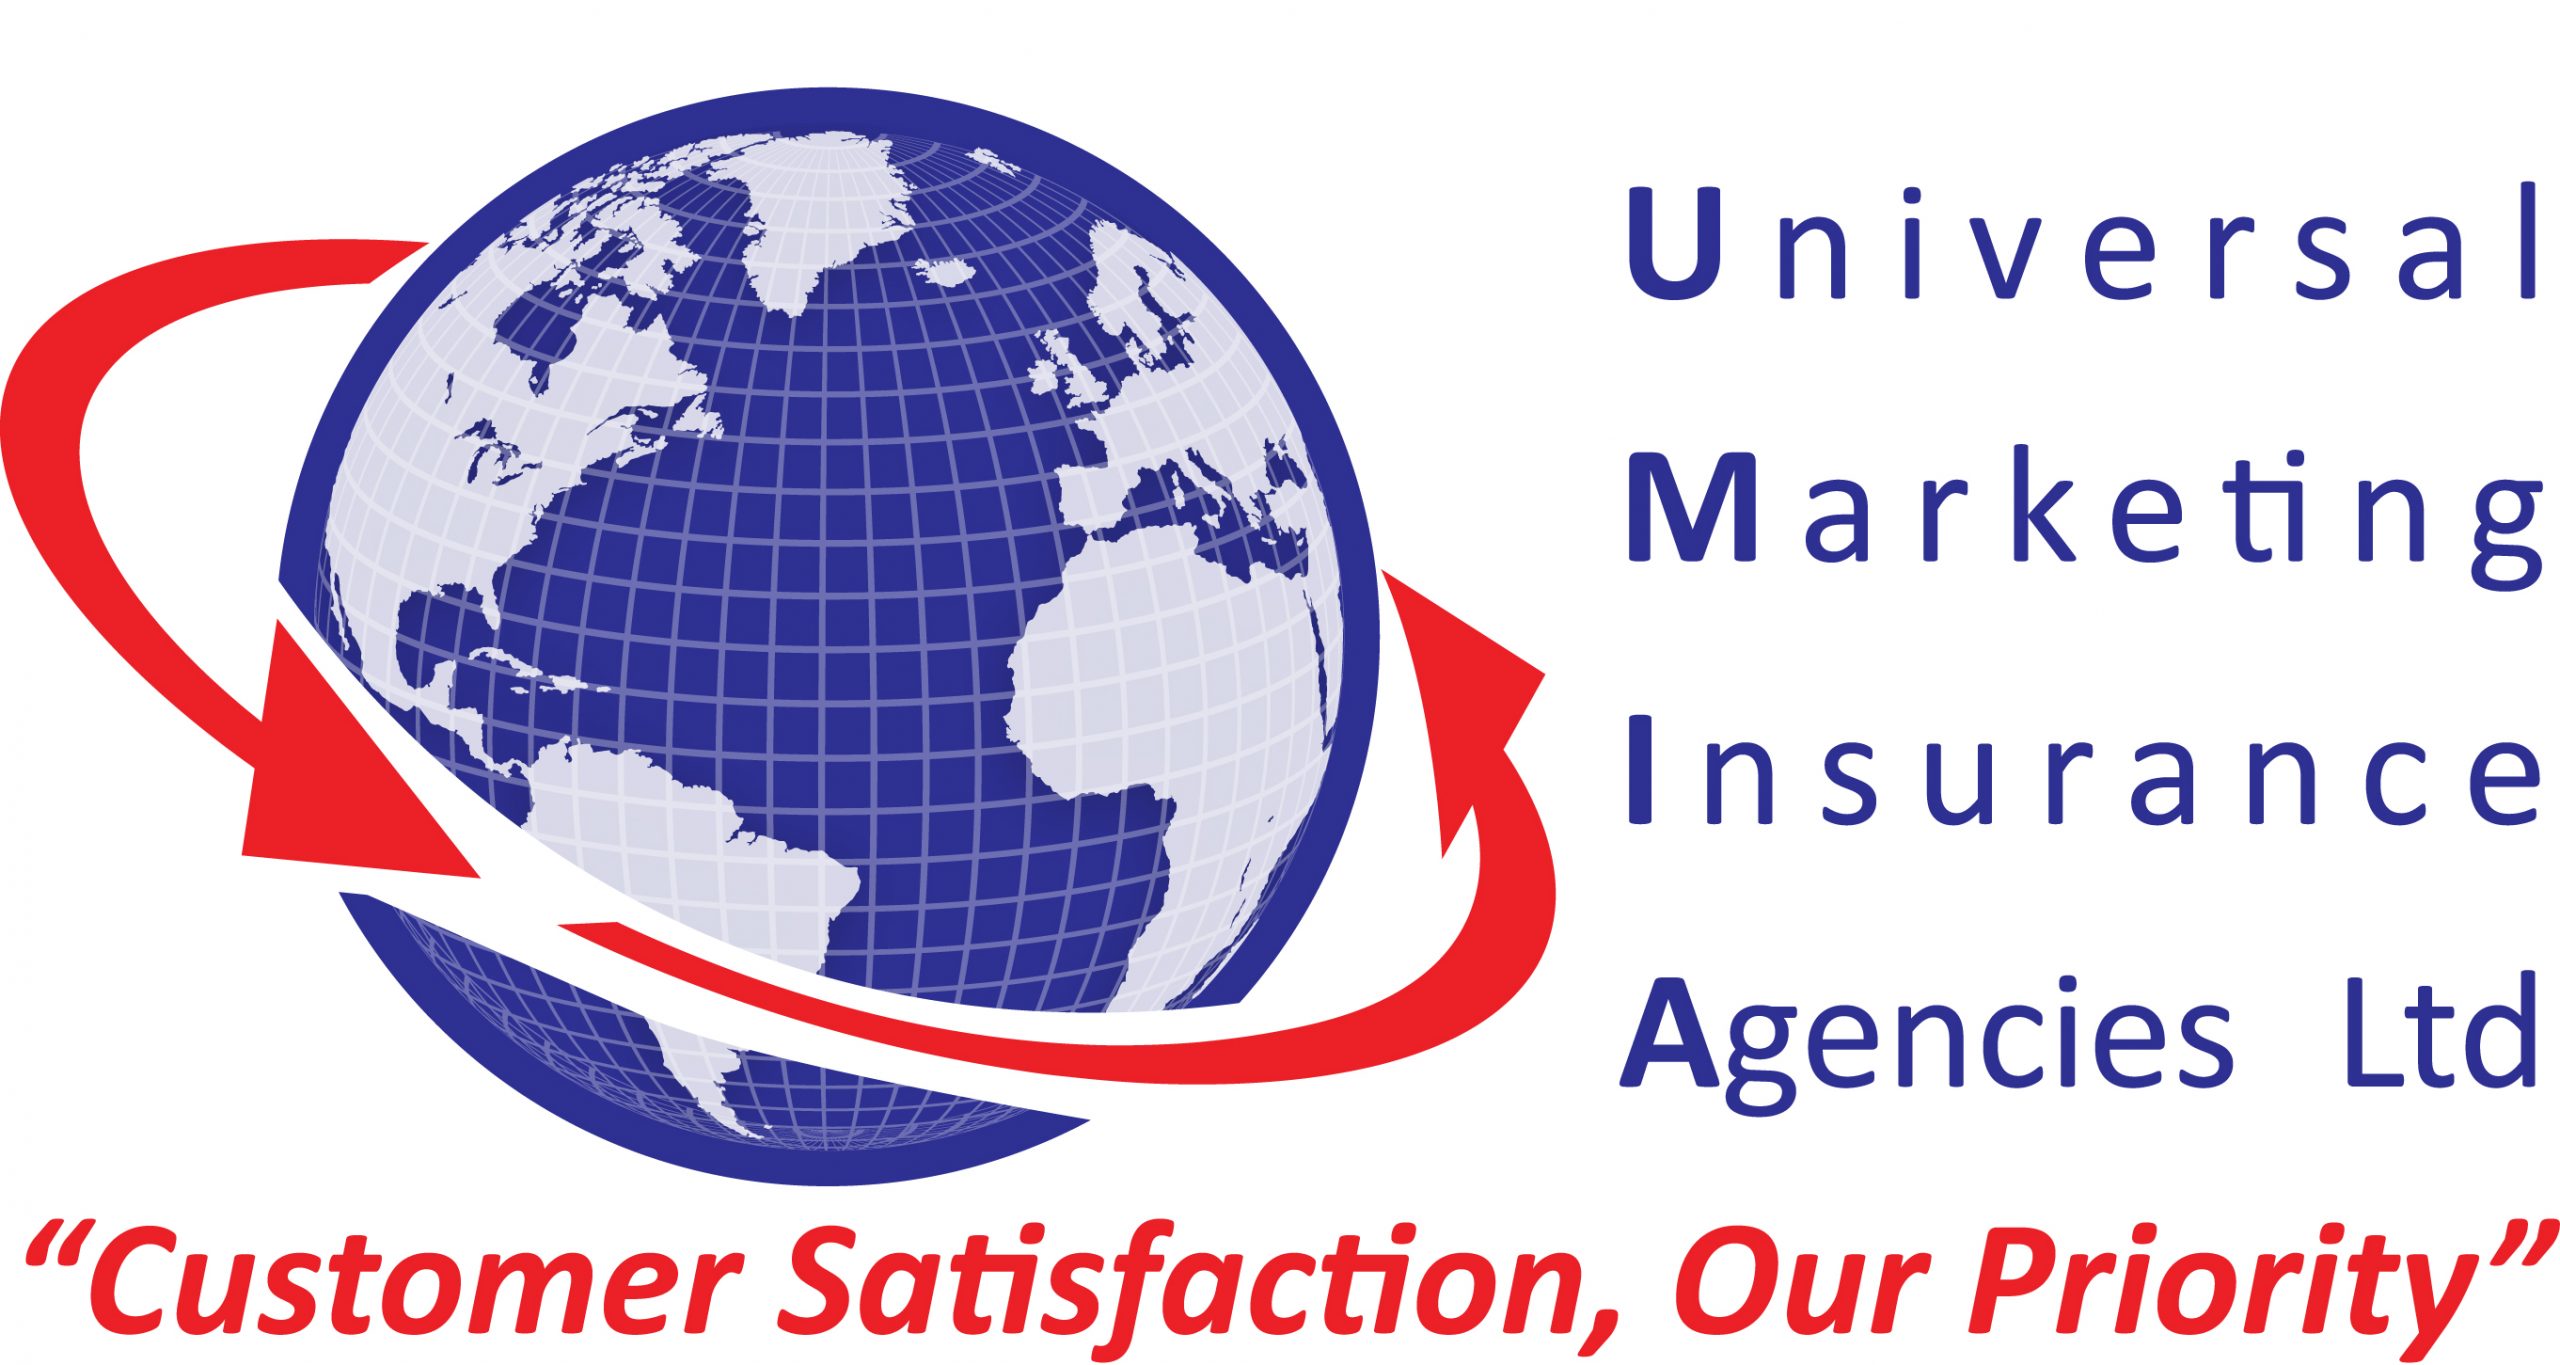 Universal Marketing insurance Agencies Ltd